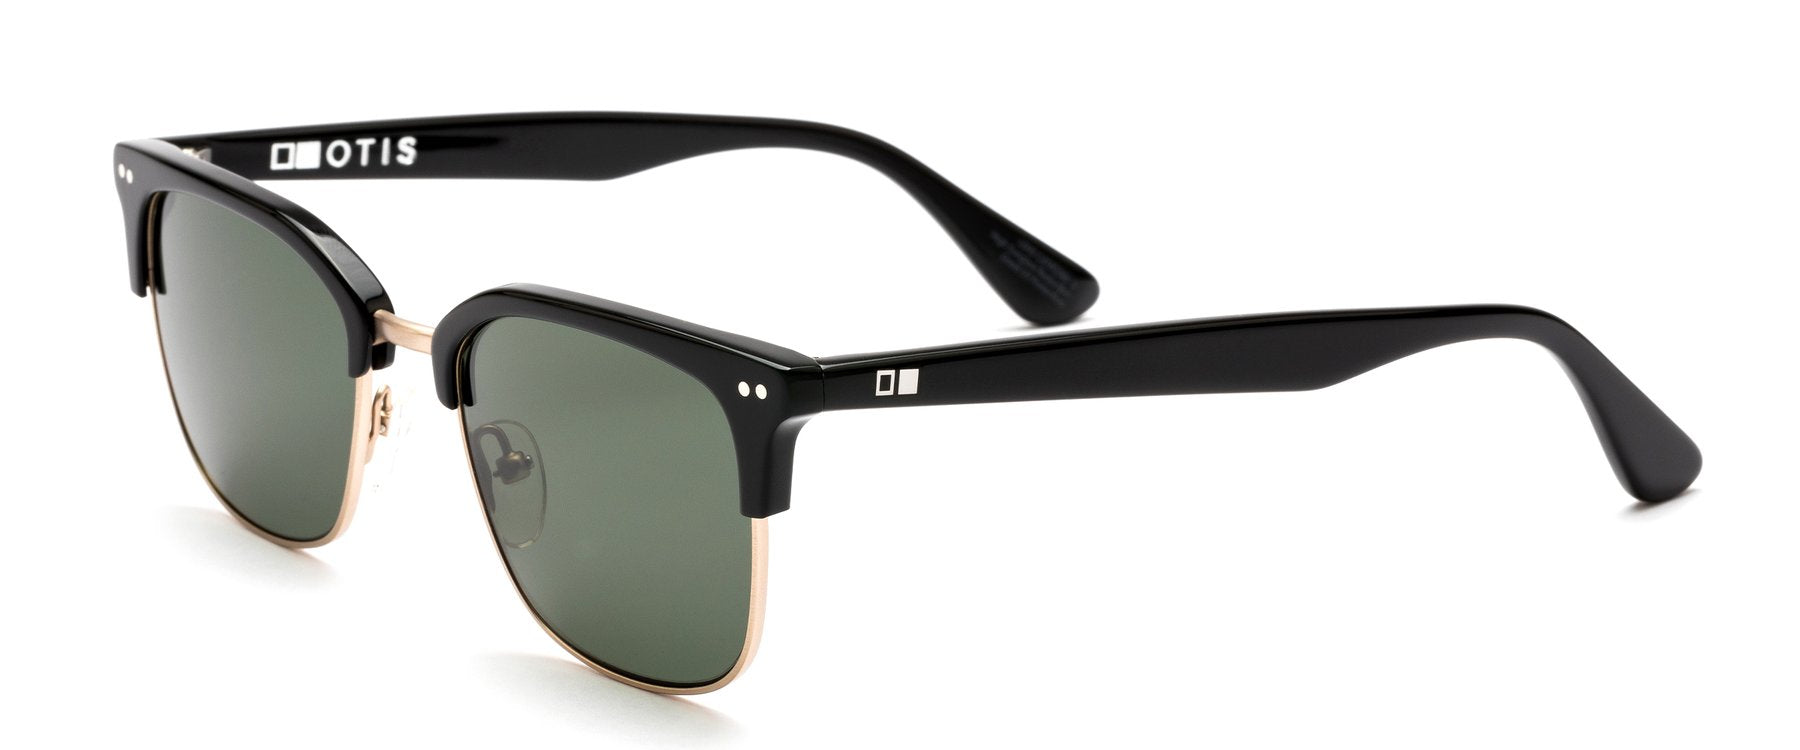 Otis 100 club Black/Brushed Gold/Grey Polarised - Board Store Otis EyewearSunglasses  